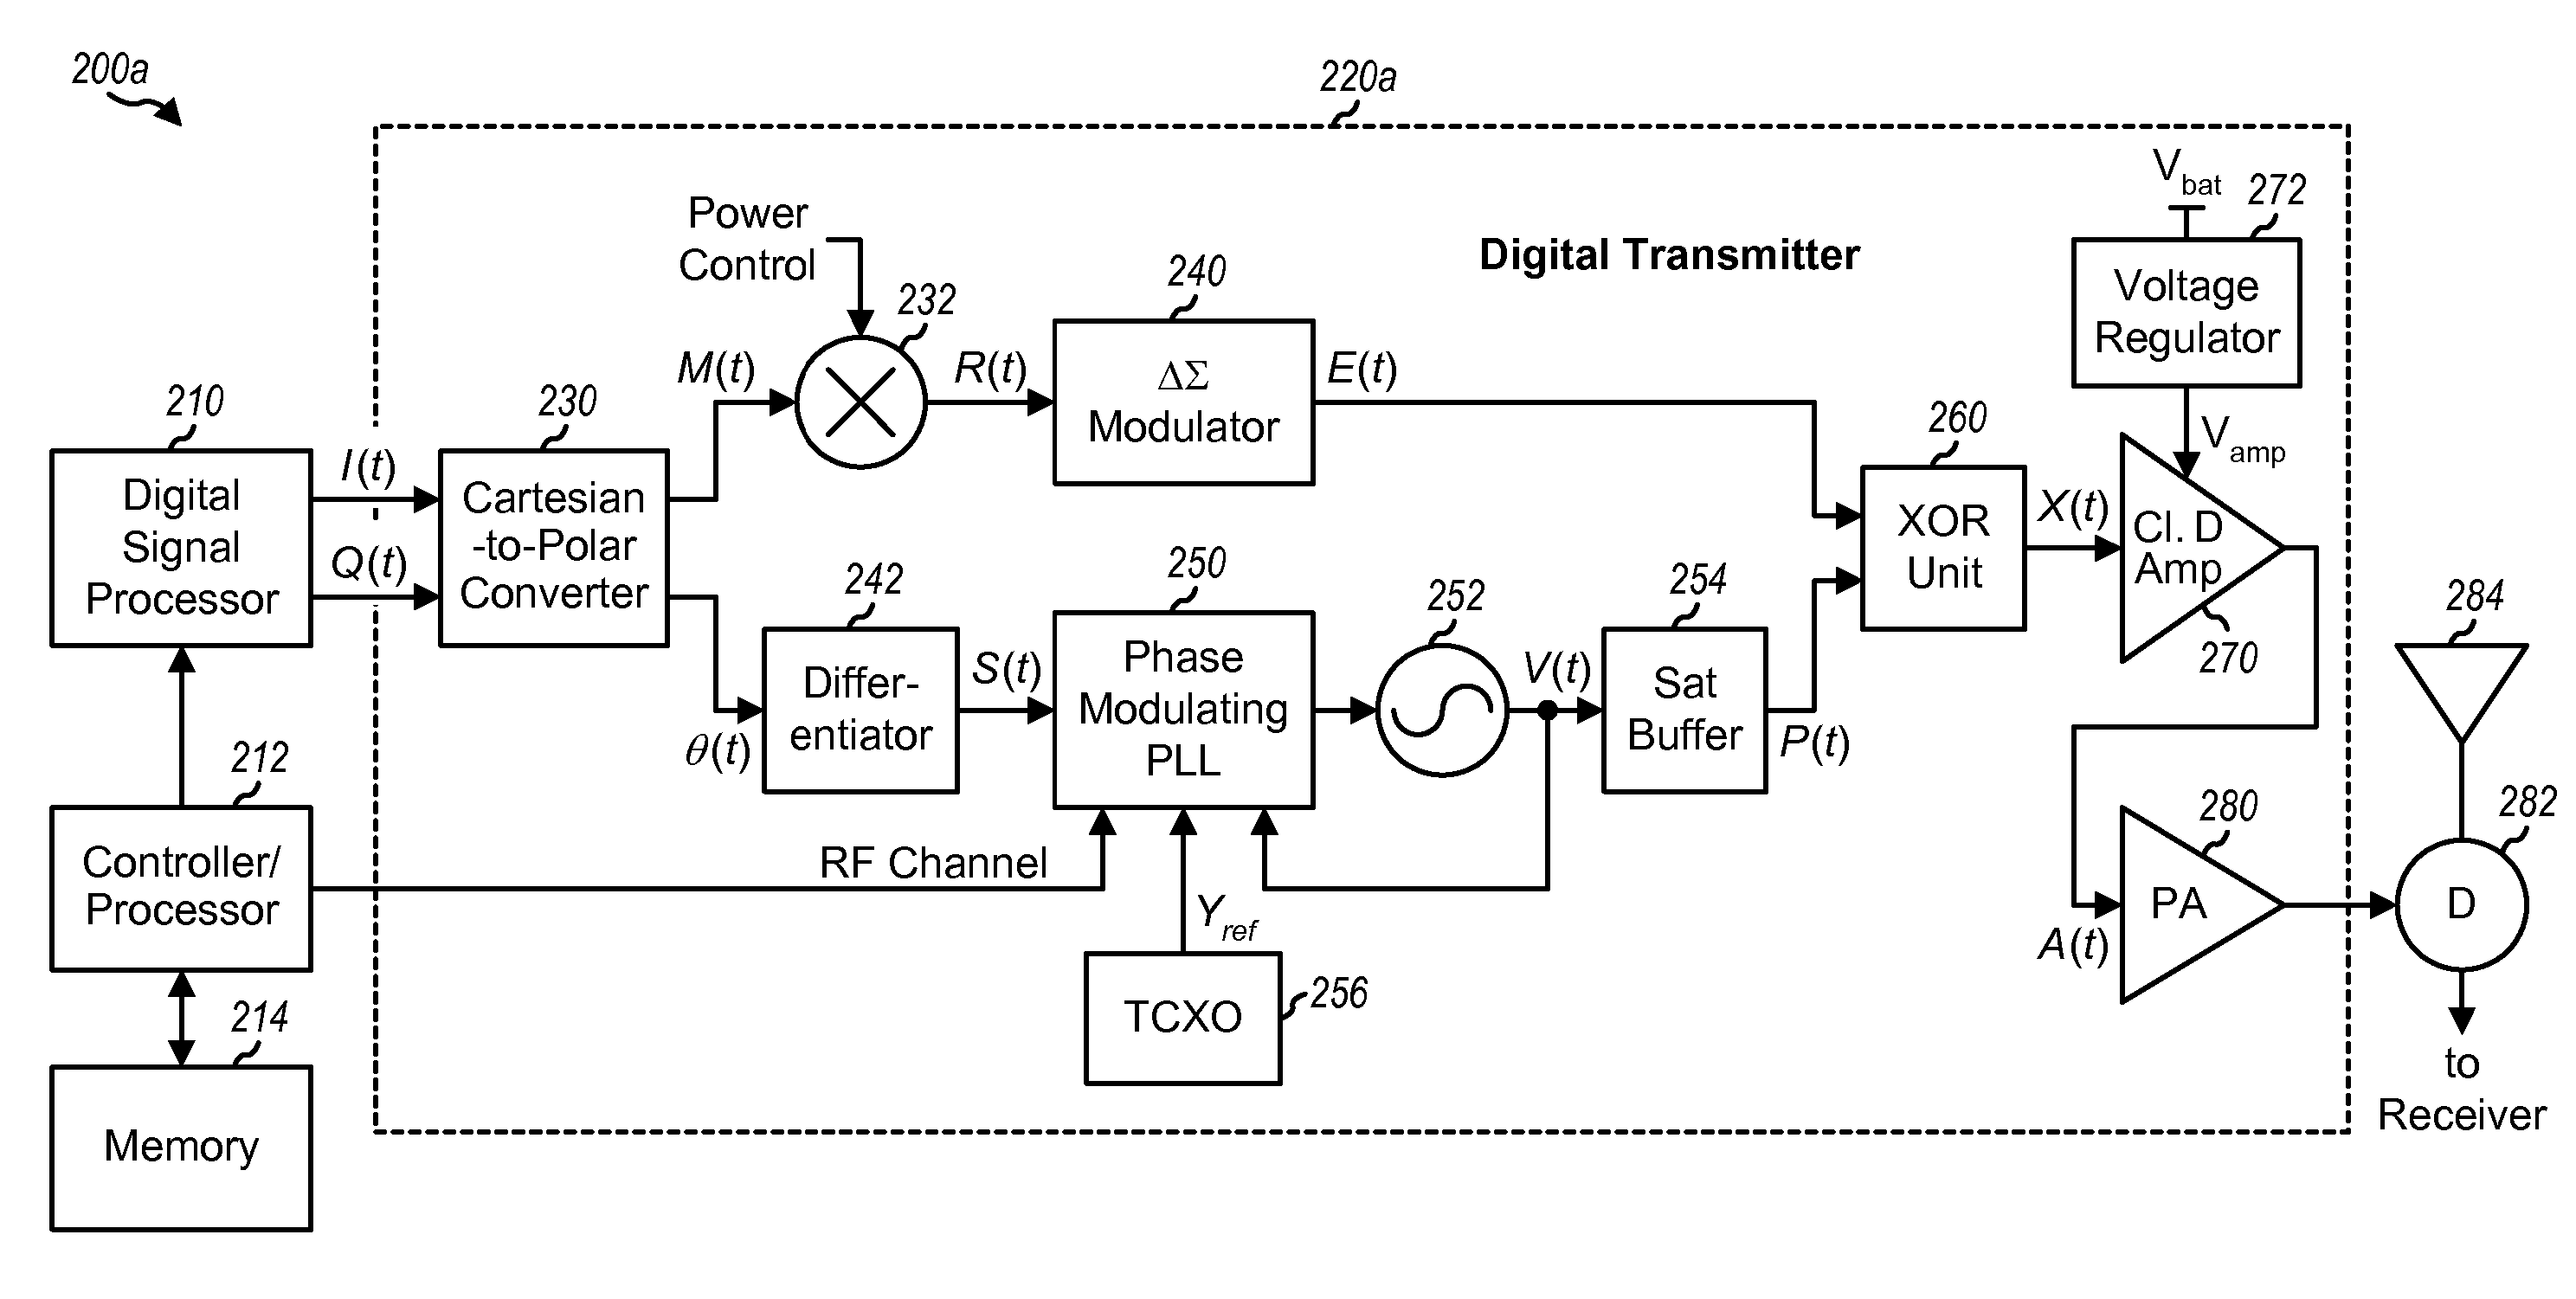 Digital transmitters for wireless communication